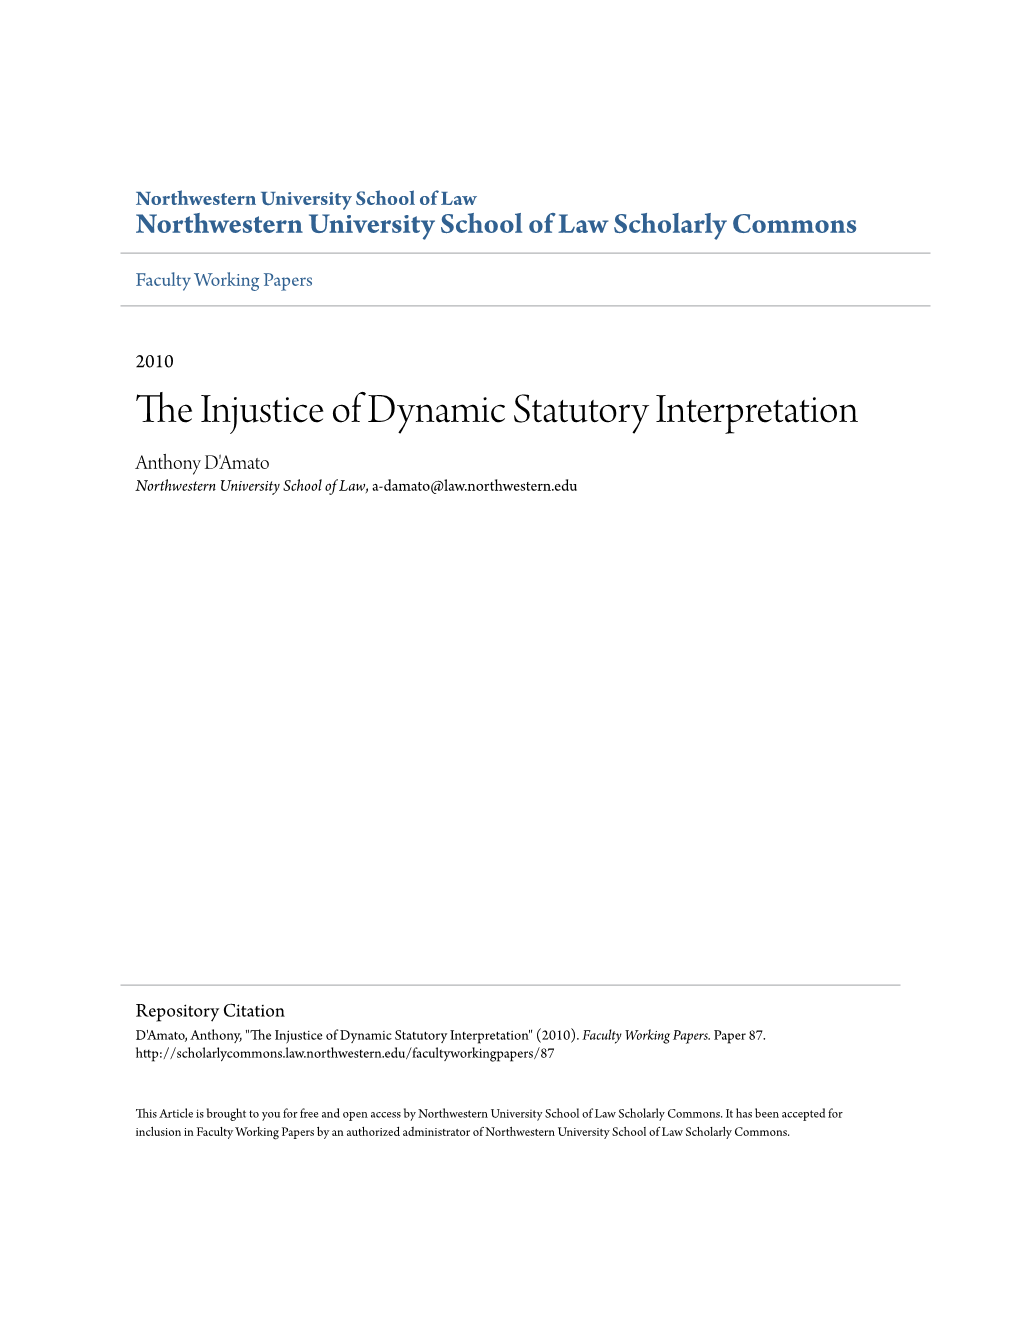 The Injustice of Dynamic Statutory Interpretation, by Anthony D’Amato,* 64 U